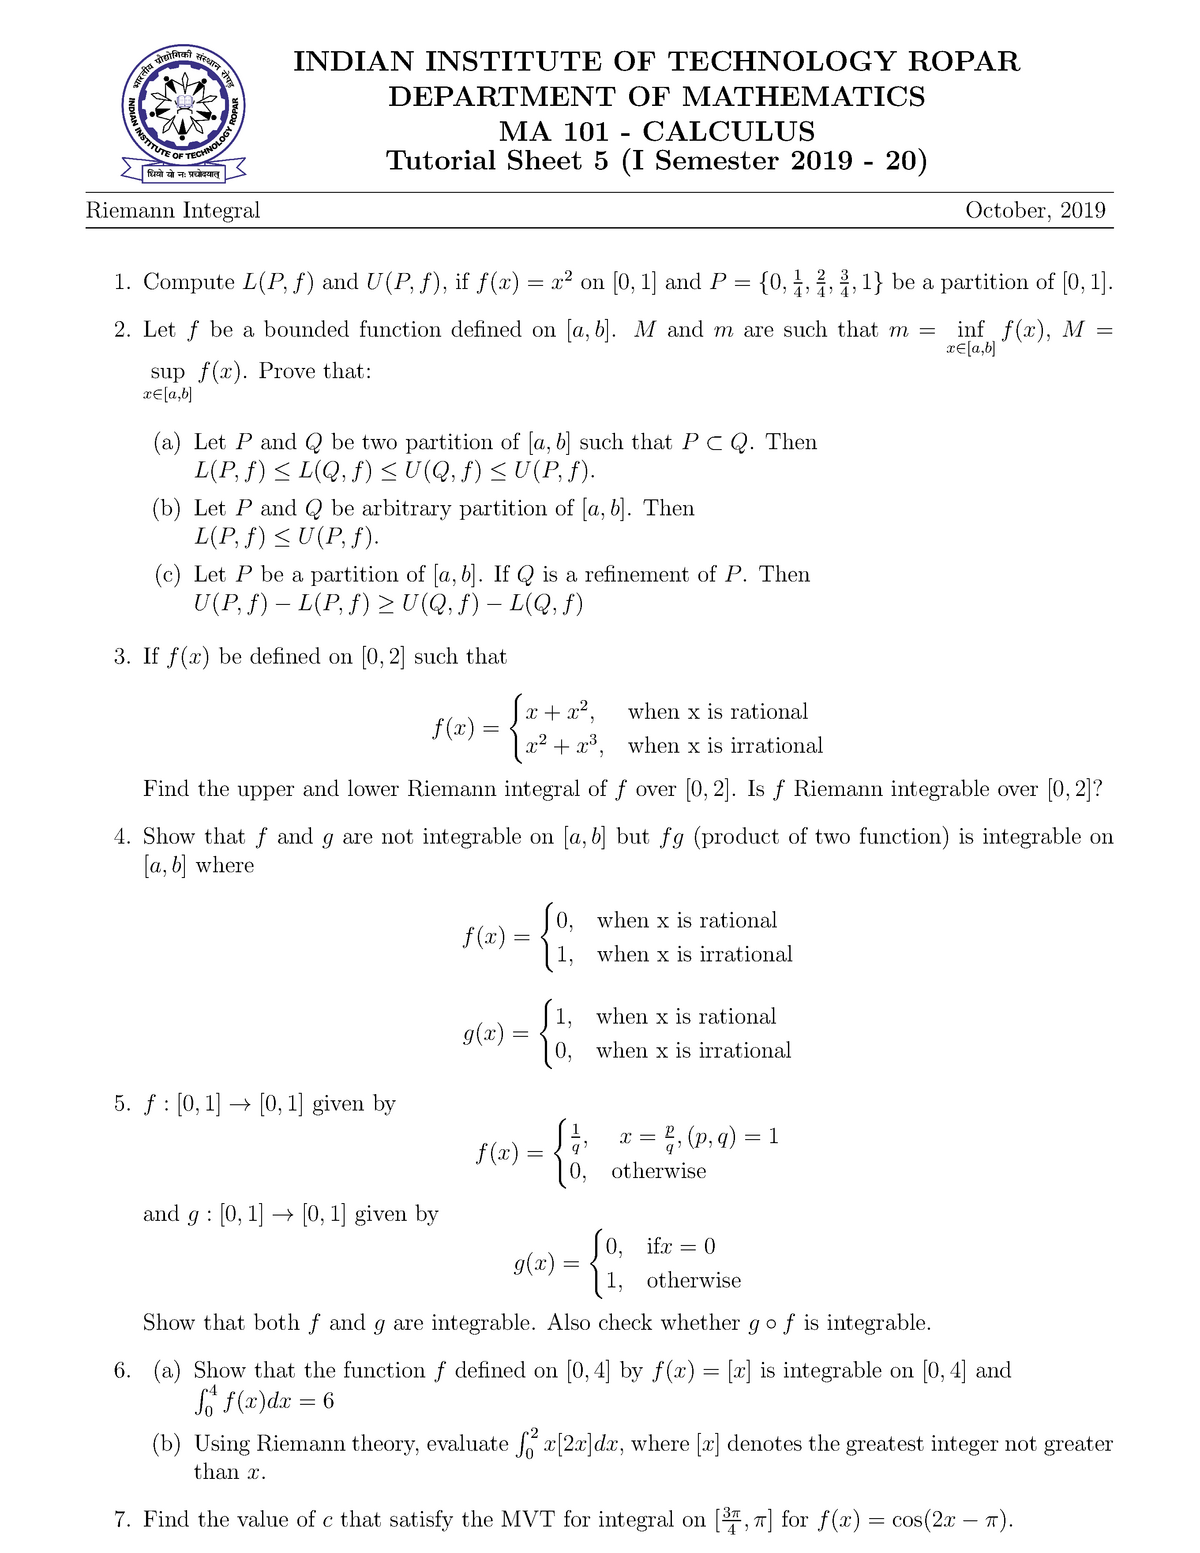 Ma101 Tutorial Sheet 5 Calculus Mtl100 Studocu